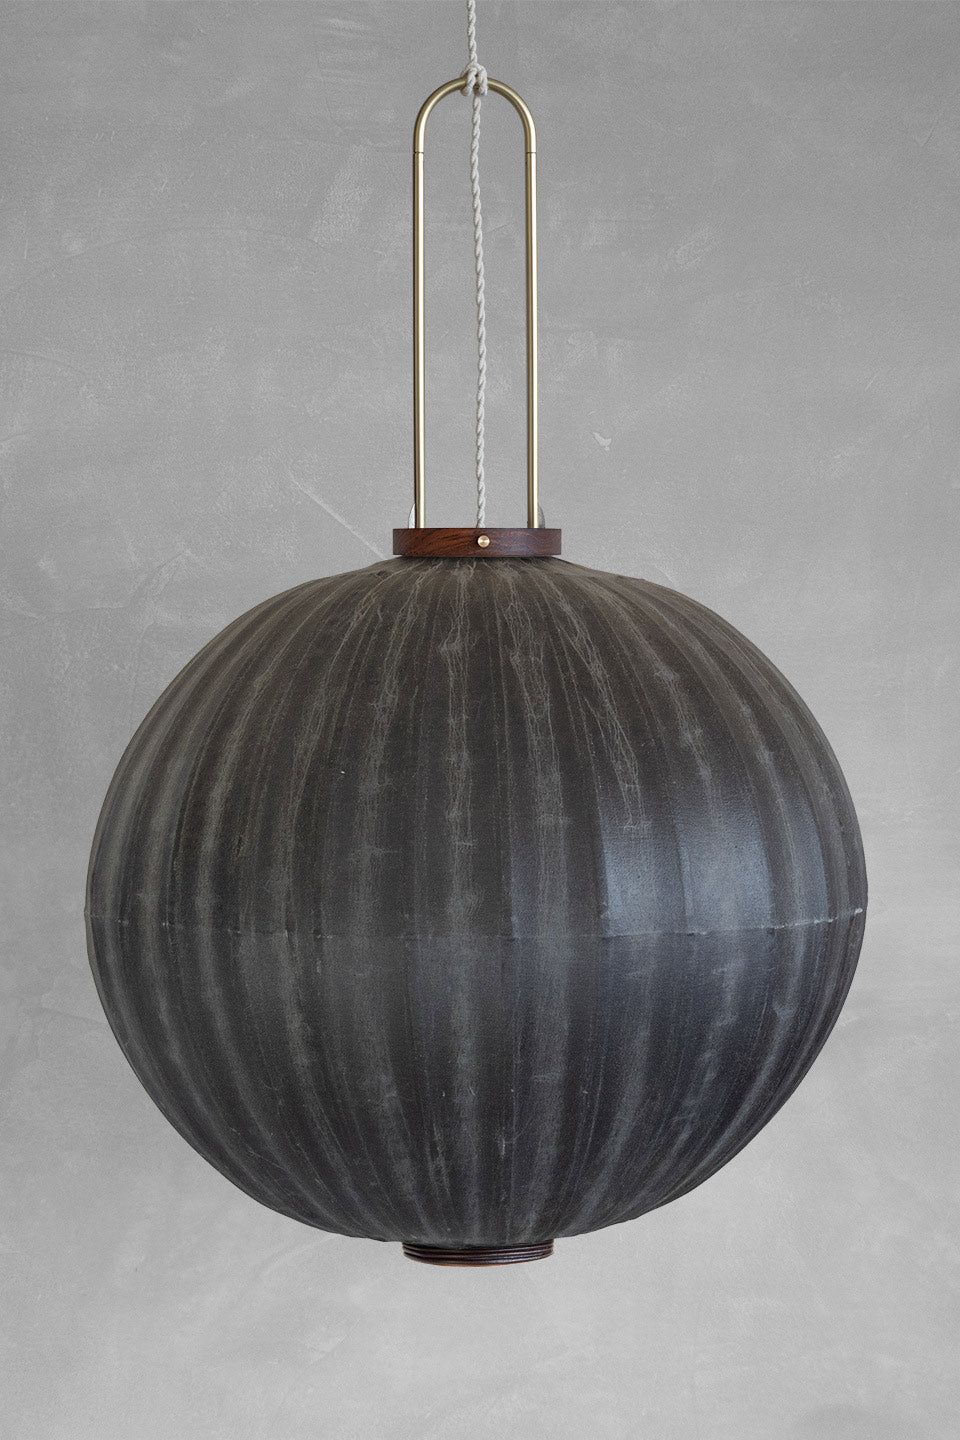 The round Mandarin-shaped version of the Heritage Lantern Black by Taiwan Lantern.